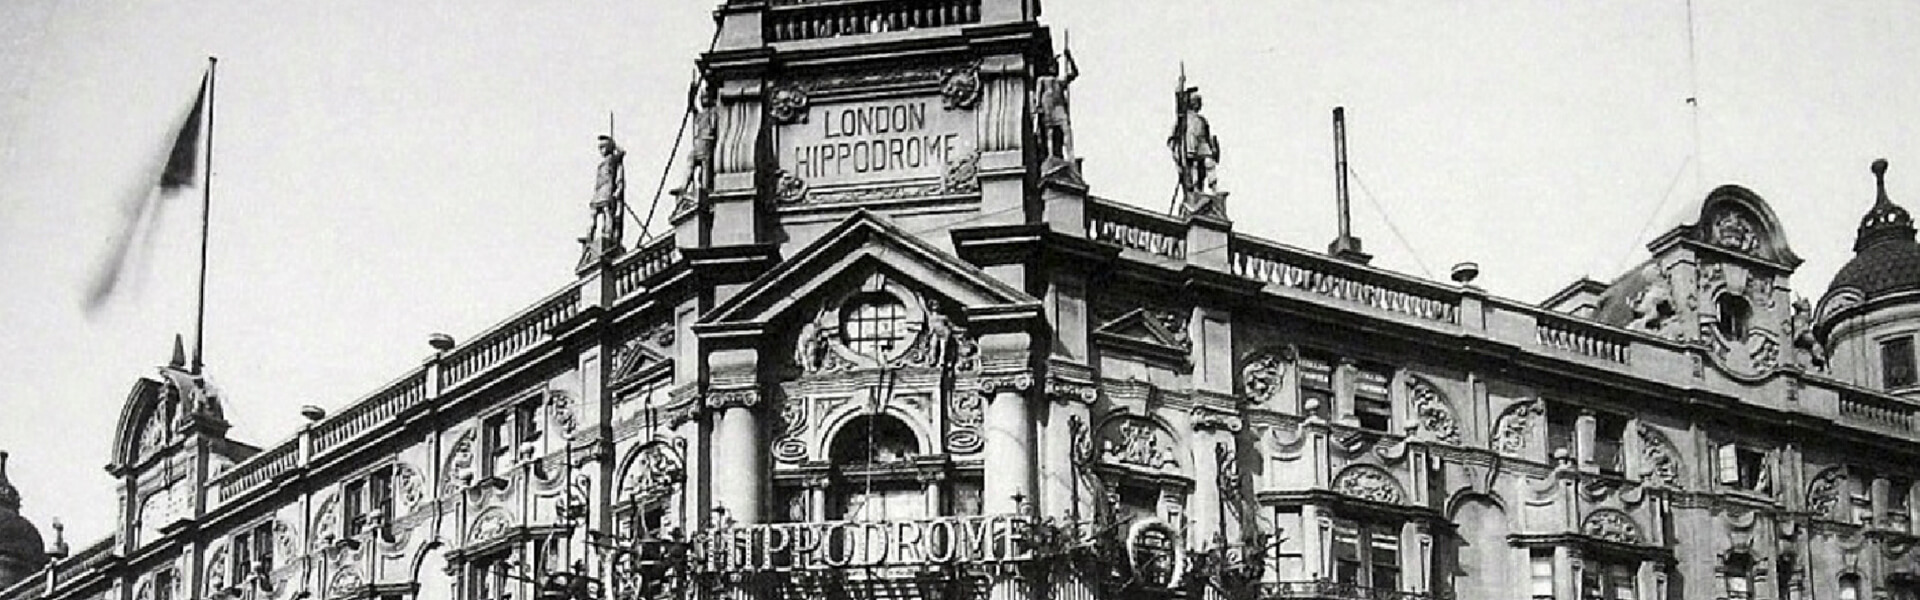 Hippodrome History